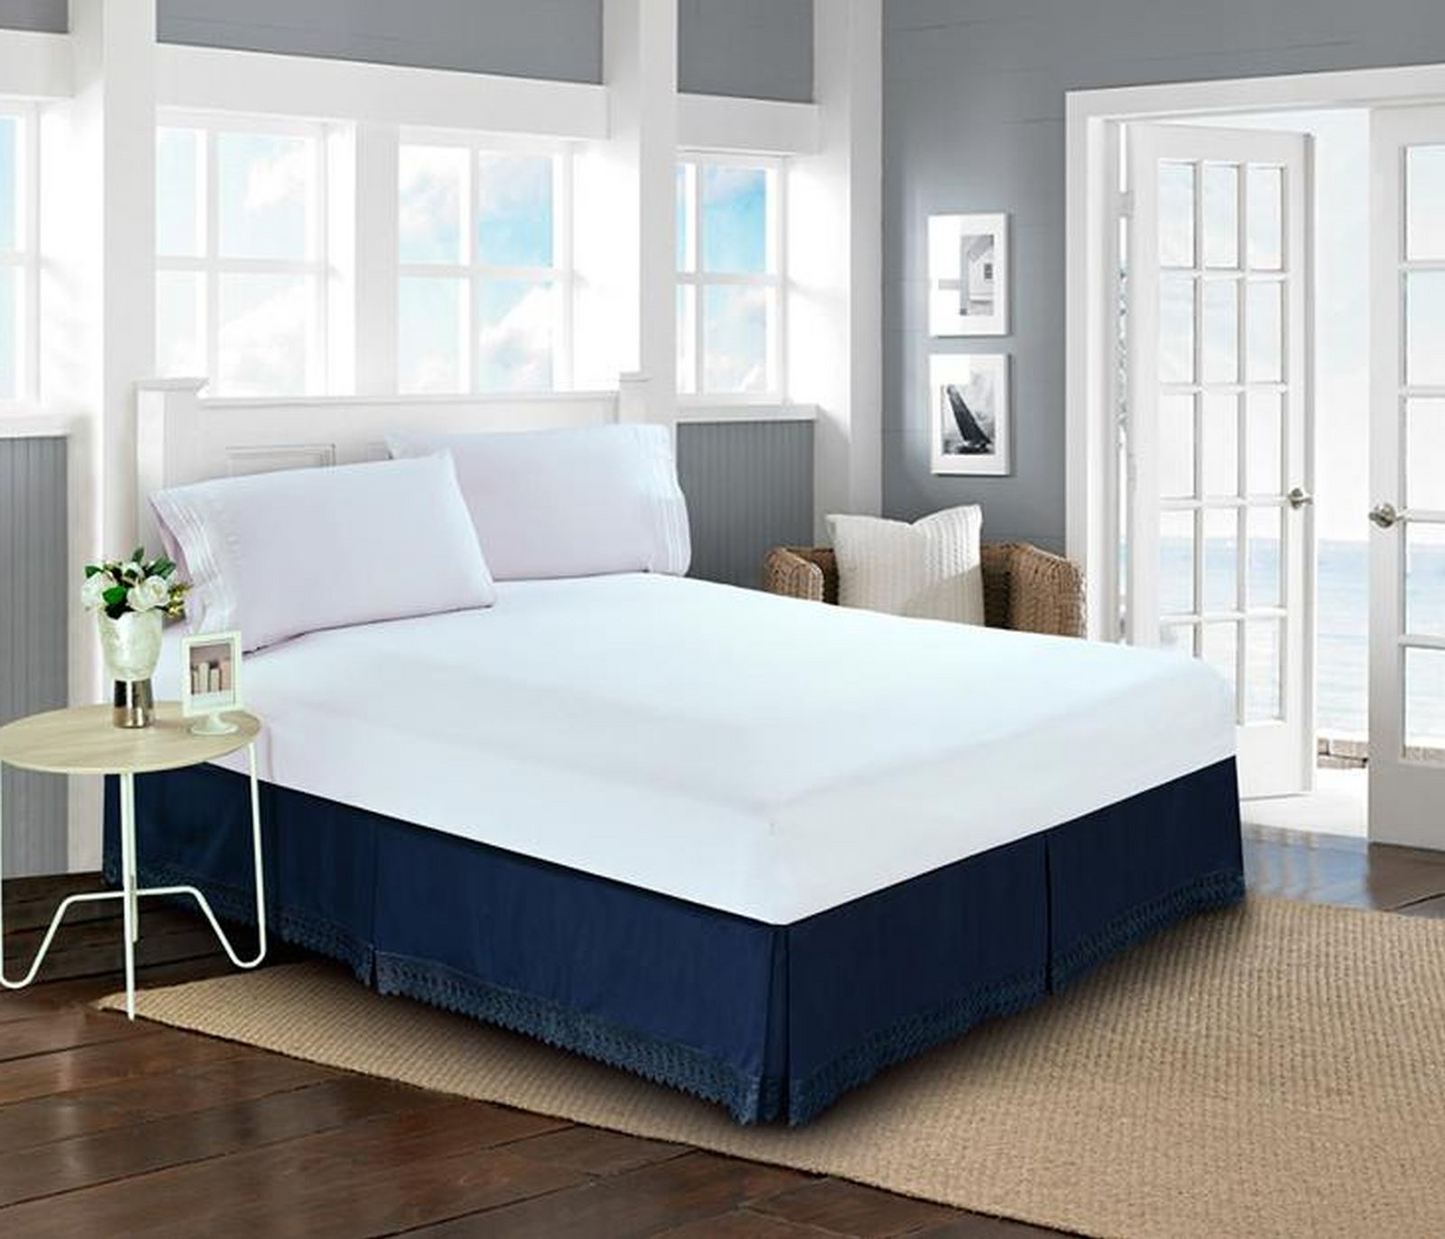 Elegant Comfort Lace Fringe Bed Skirt - 15 inch Drop - Elevate your Bed